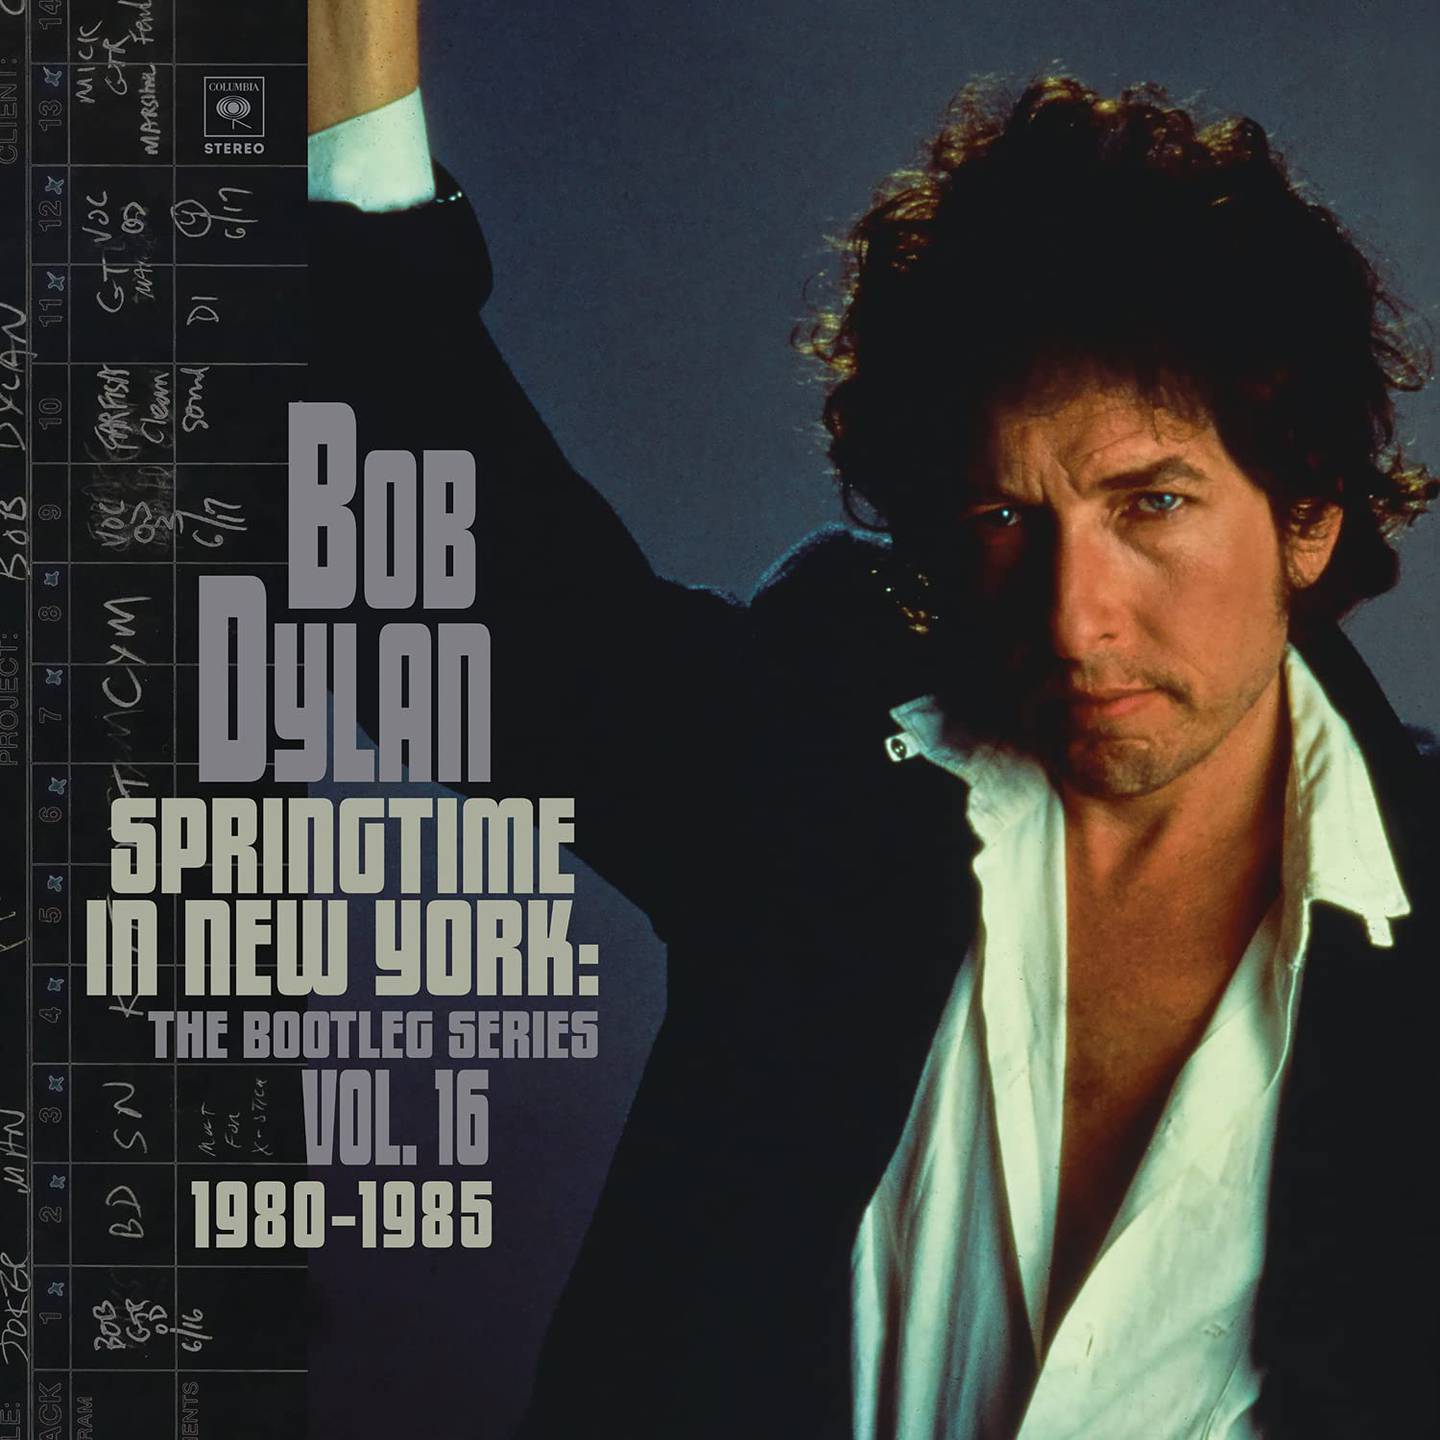 Bob Dylan: Springtime In New York - The Bootleg Series vol. 16 1980 - 1985